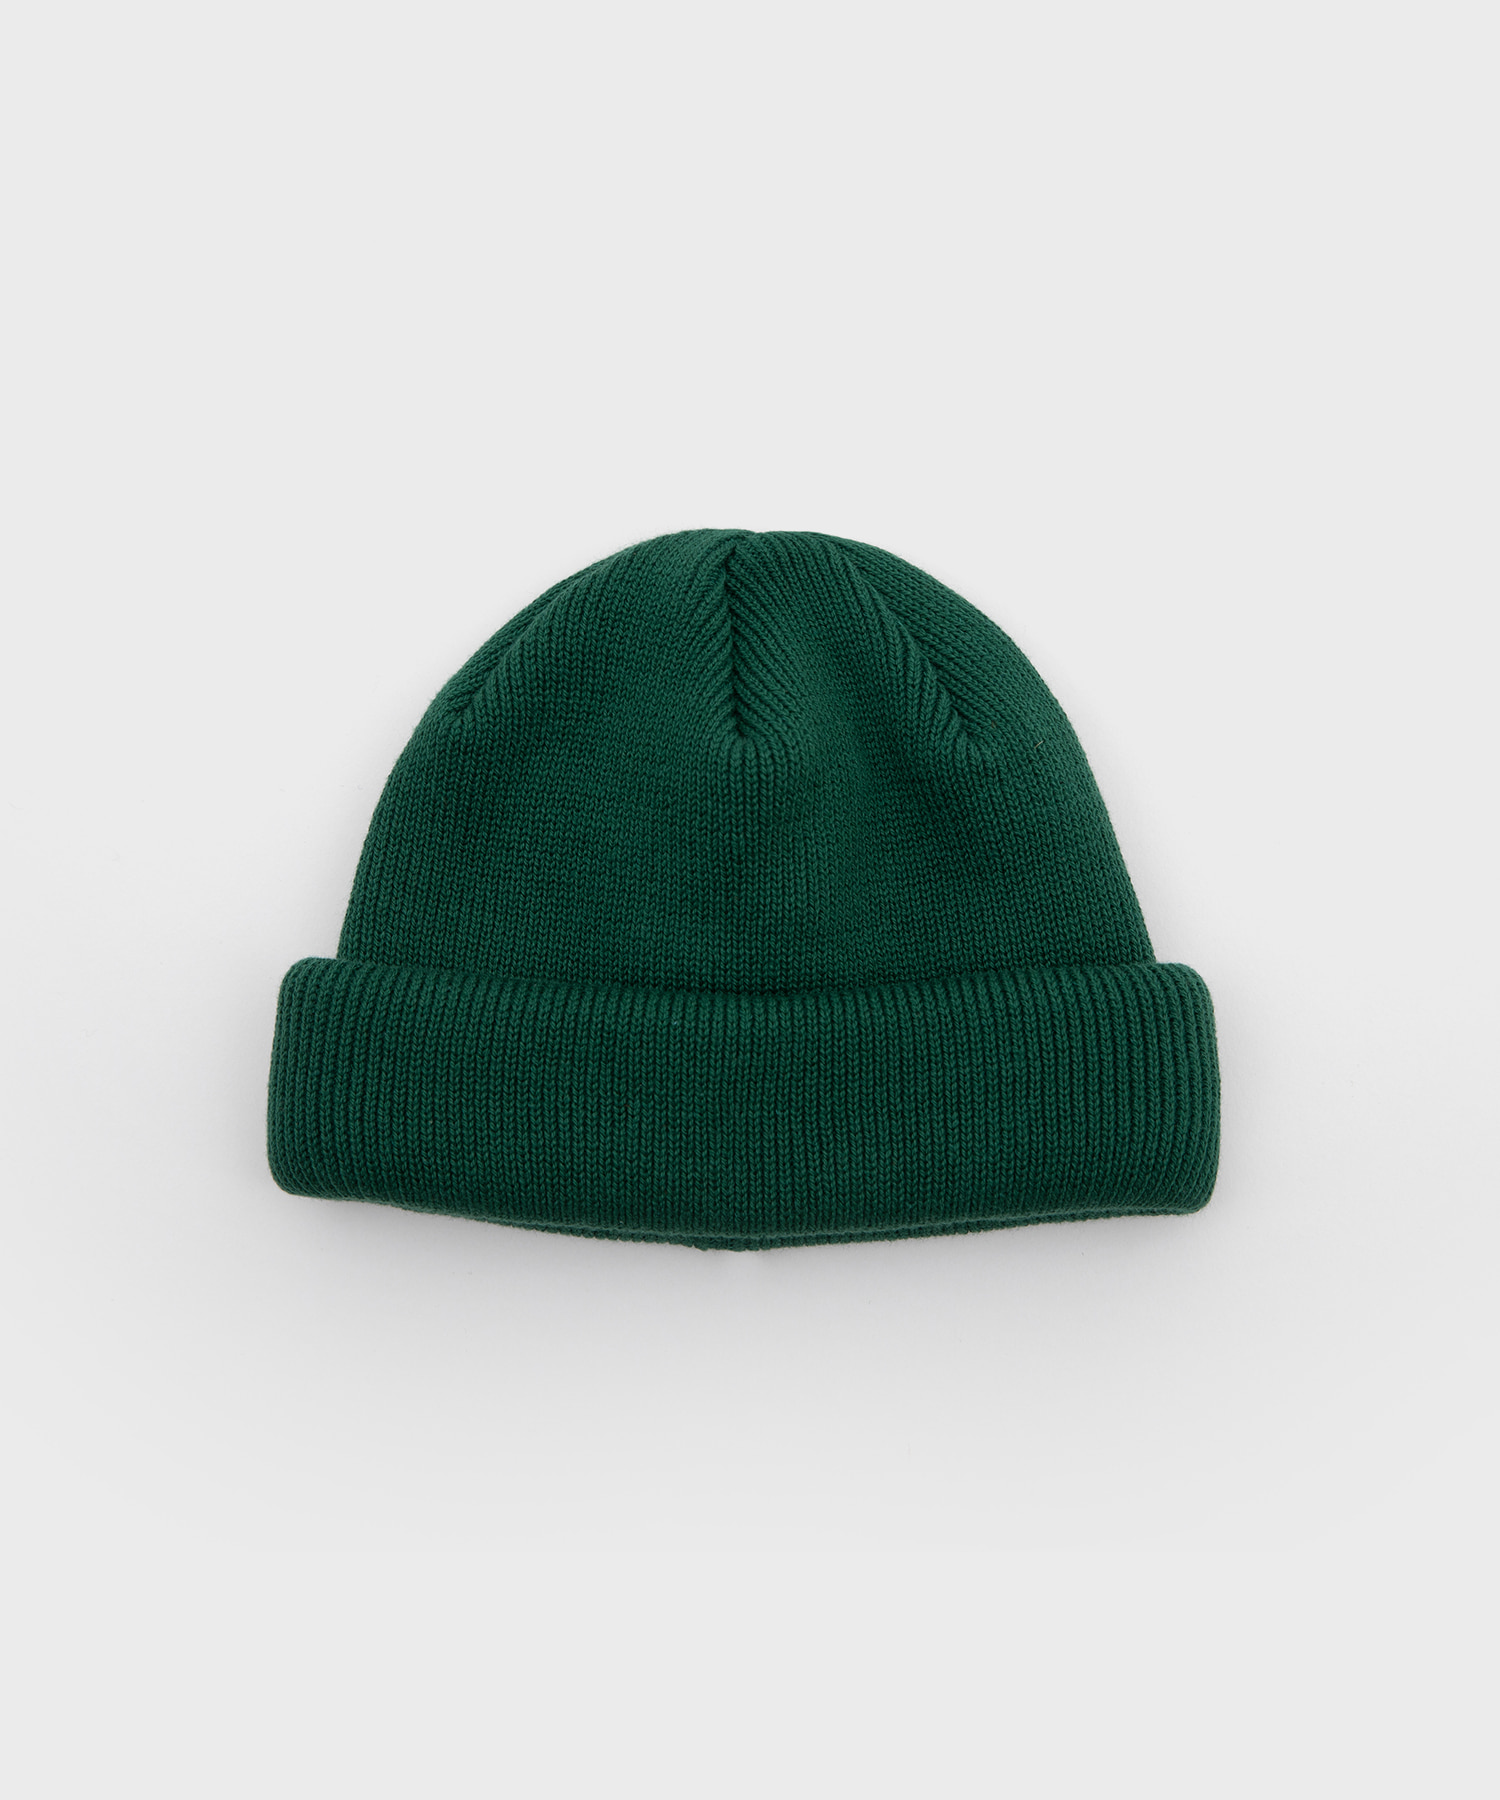 Roll Knit Cap (Green)